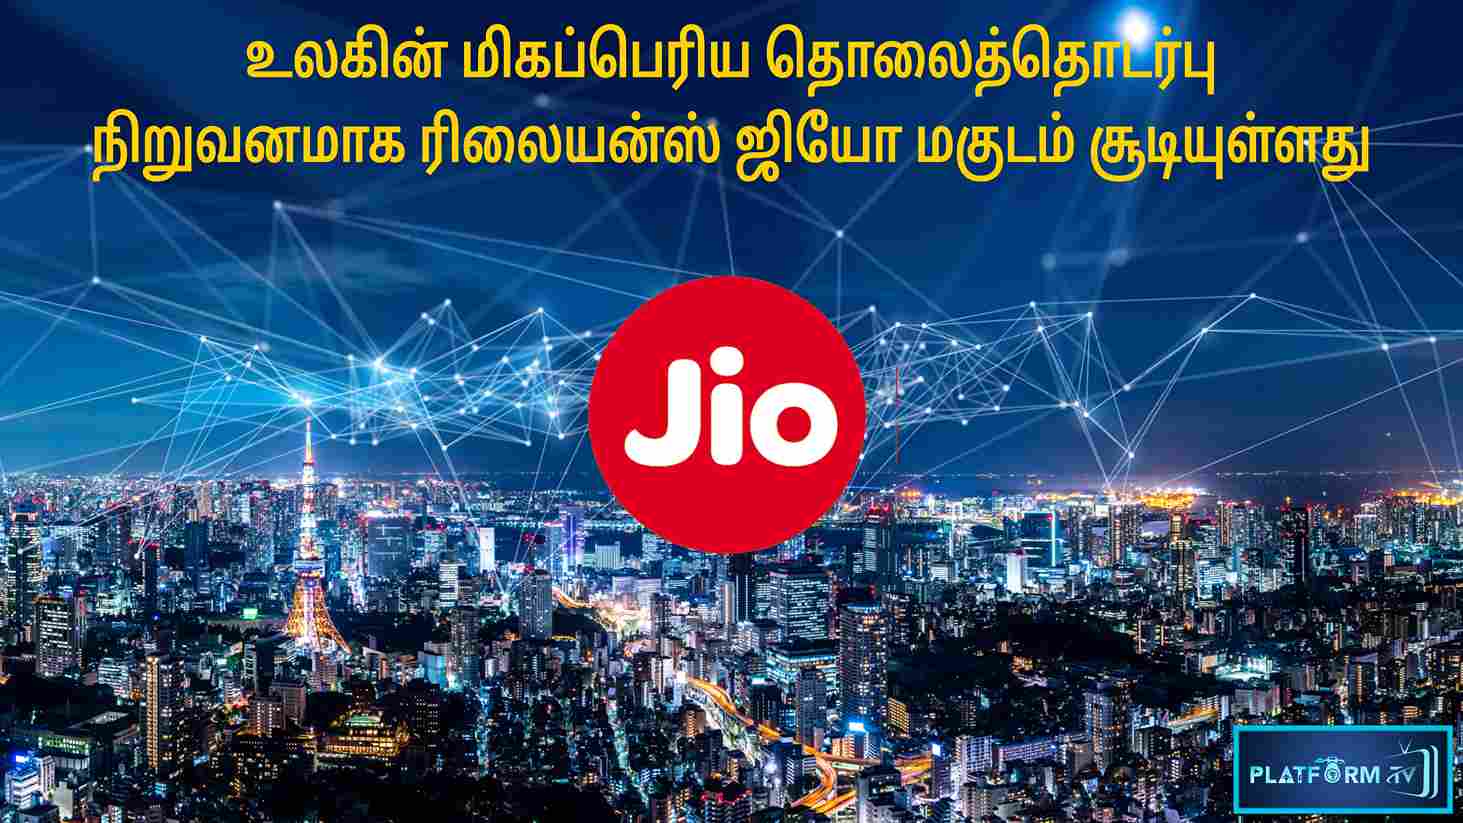 World's Largest Telecommunications Company - Platform Tamil